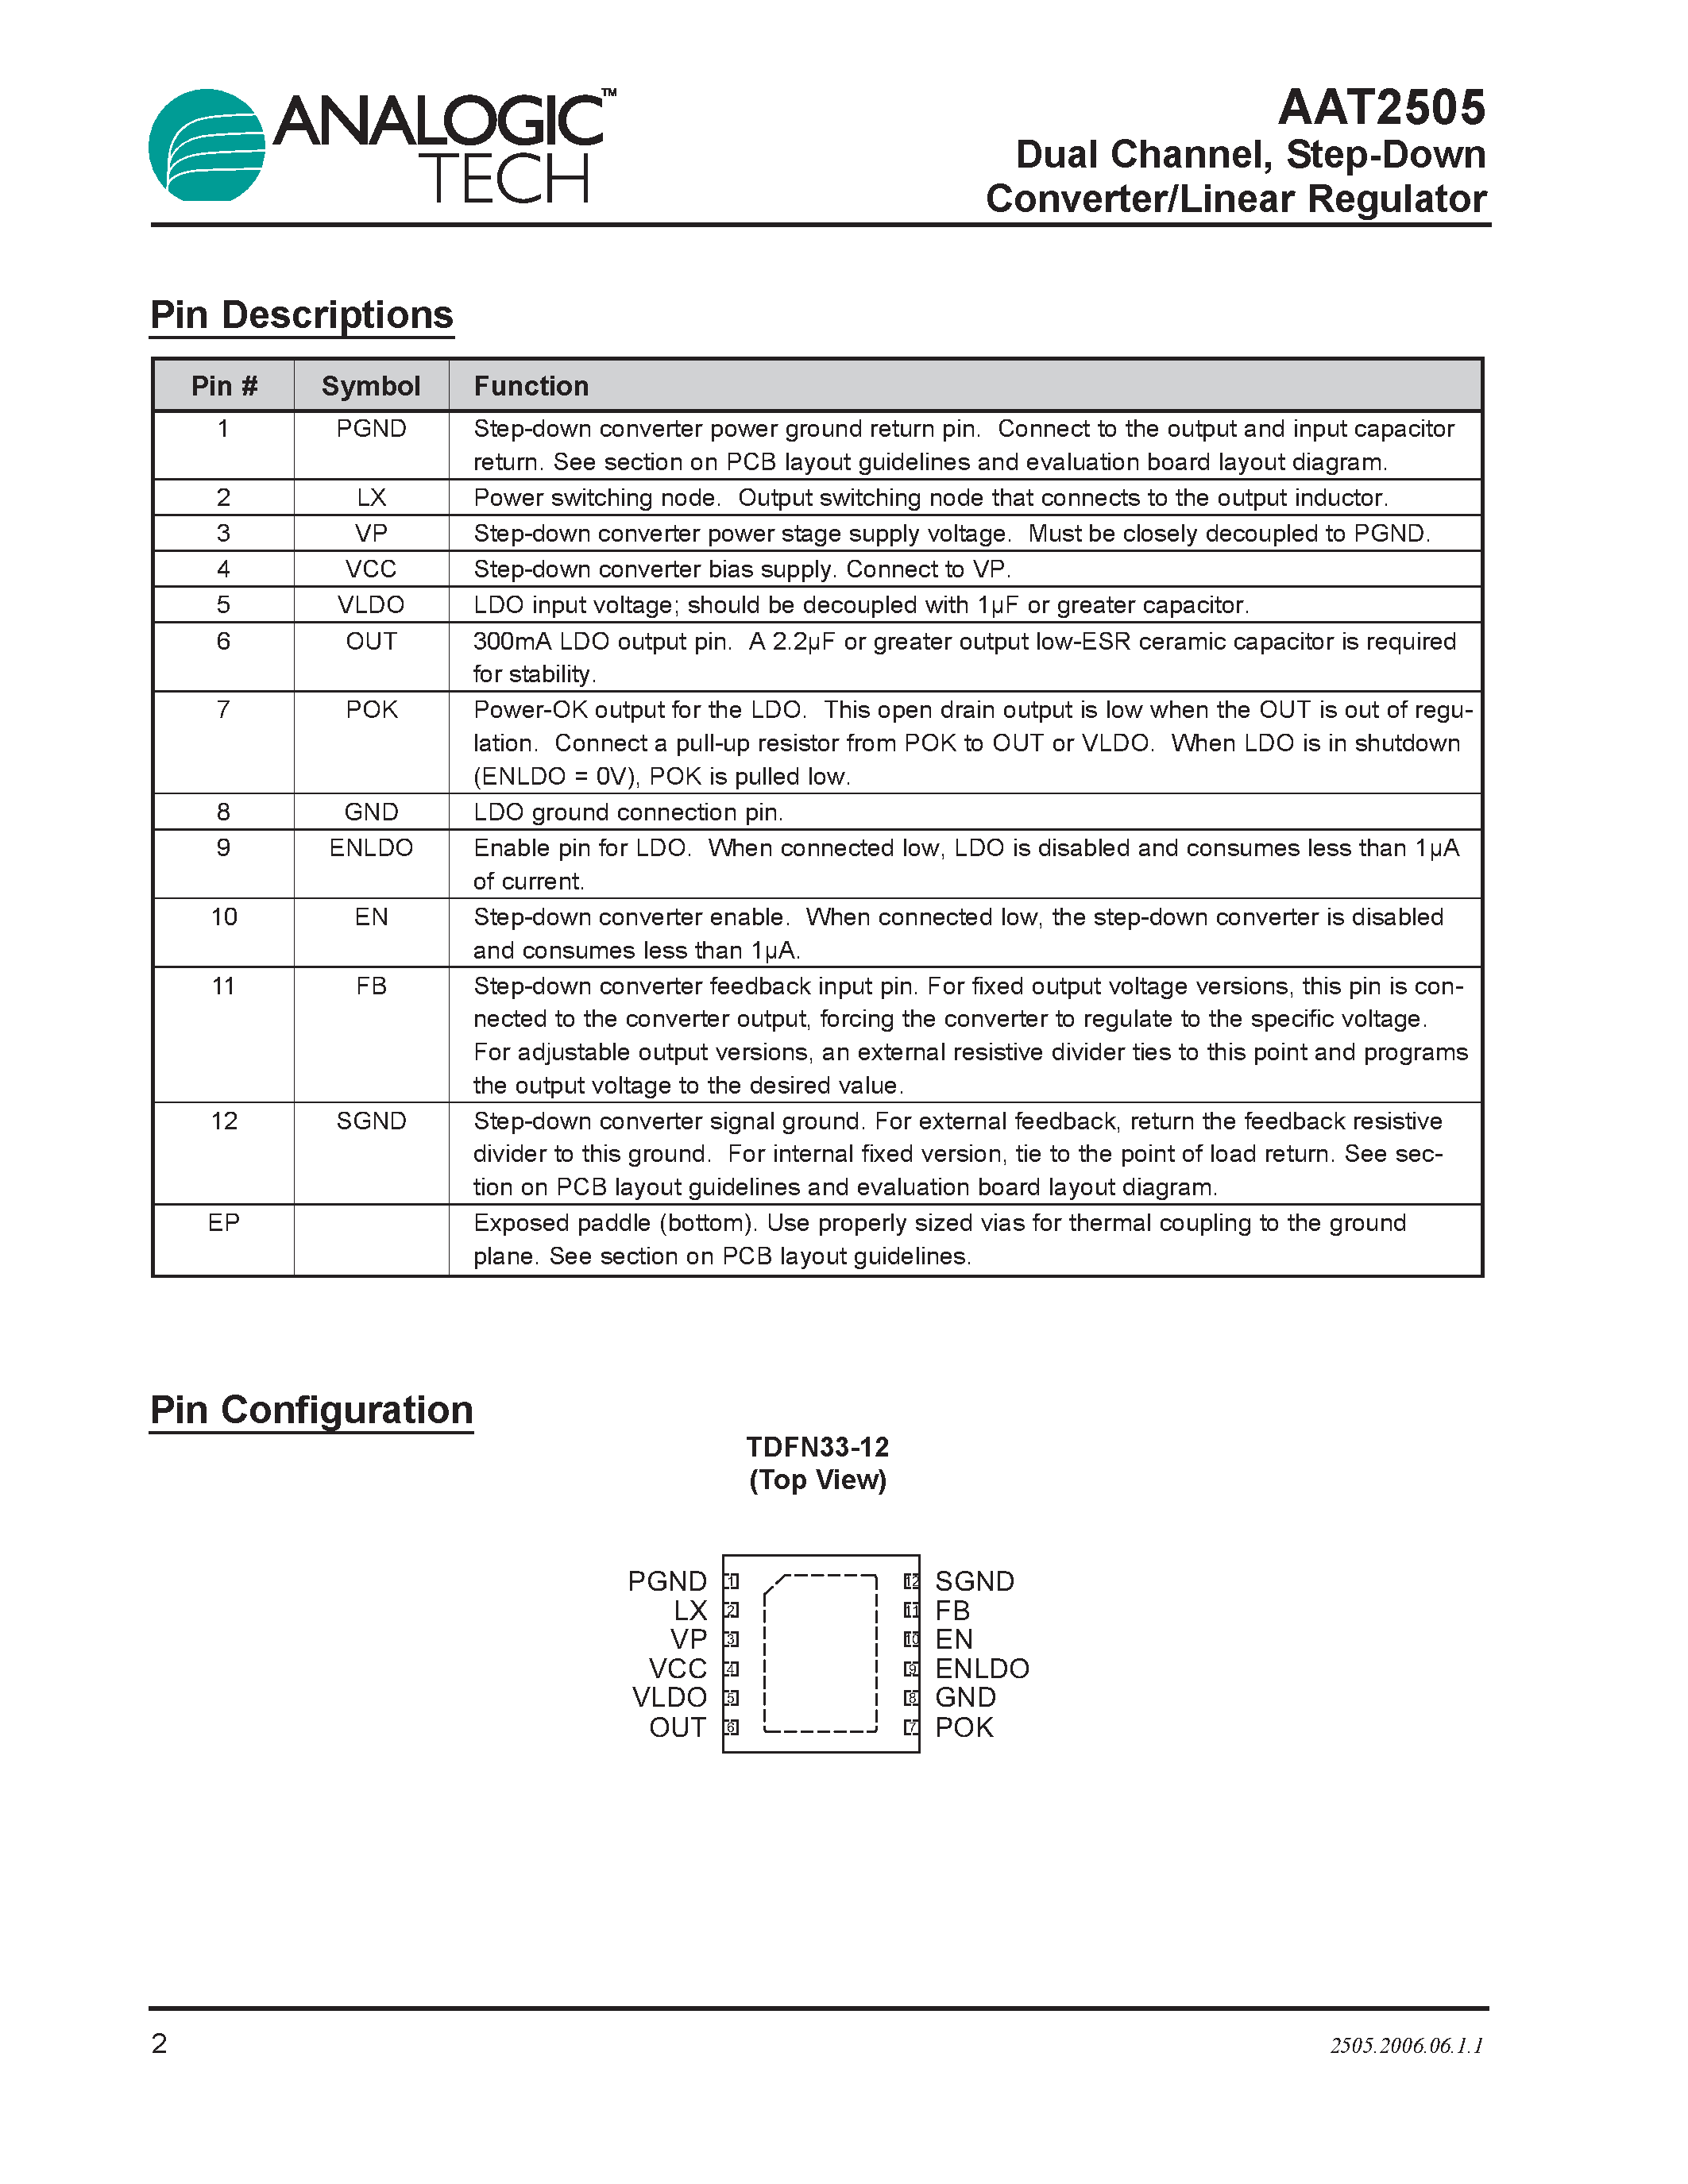 Даташит AAT2505 - Step-Down Converter/Linear Regulator страница 2